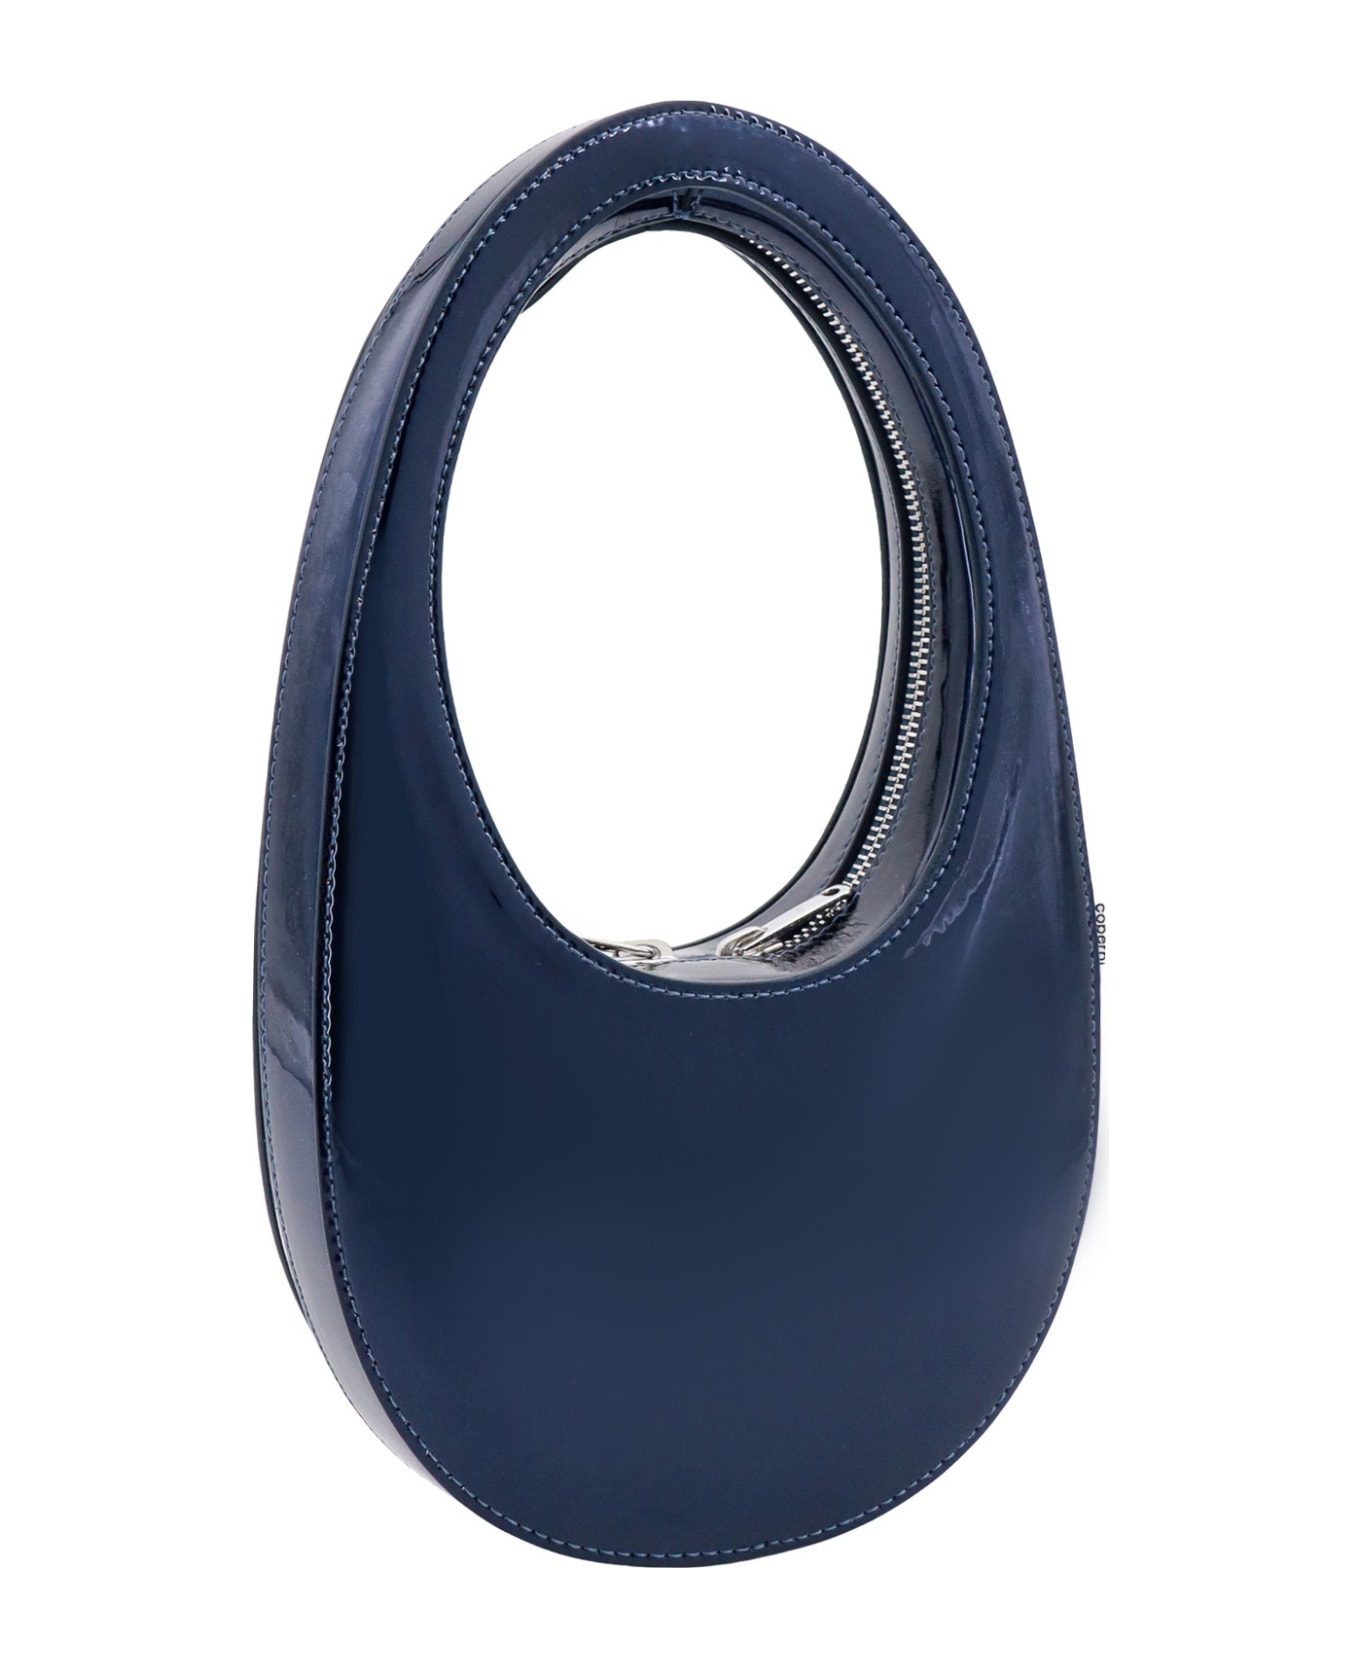 Coperni Handbag - Blue